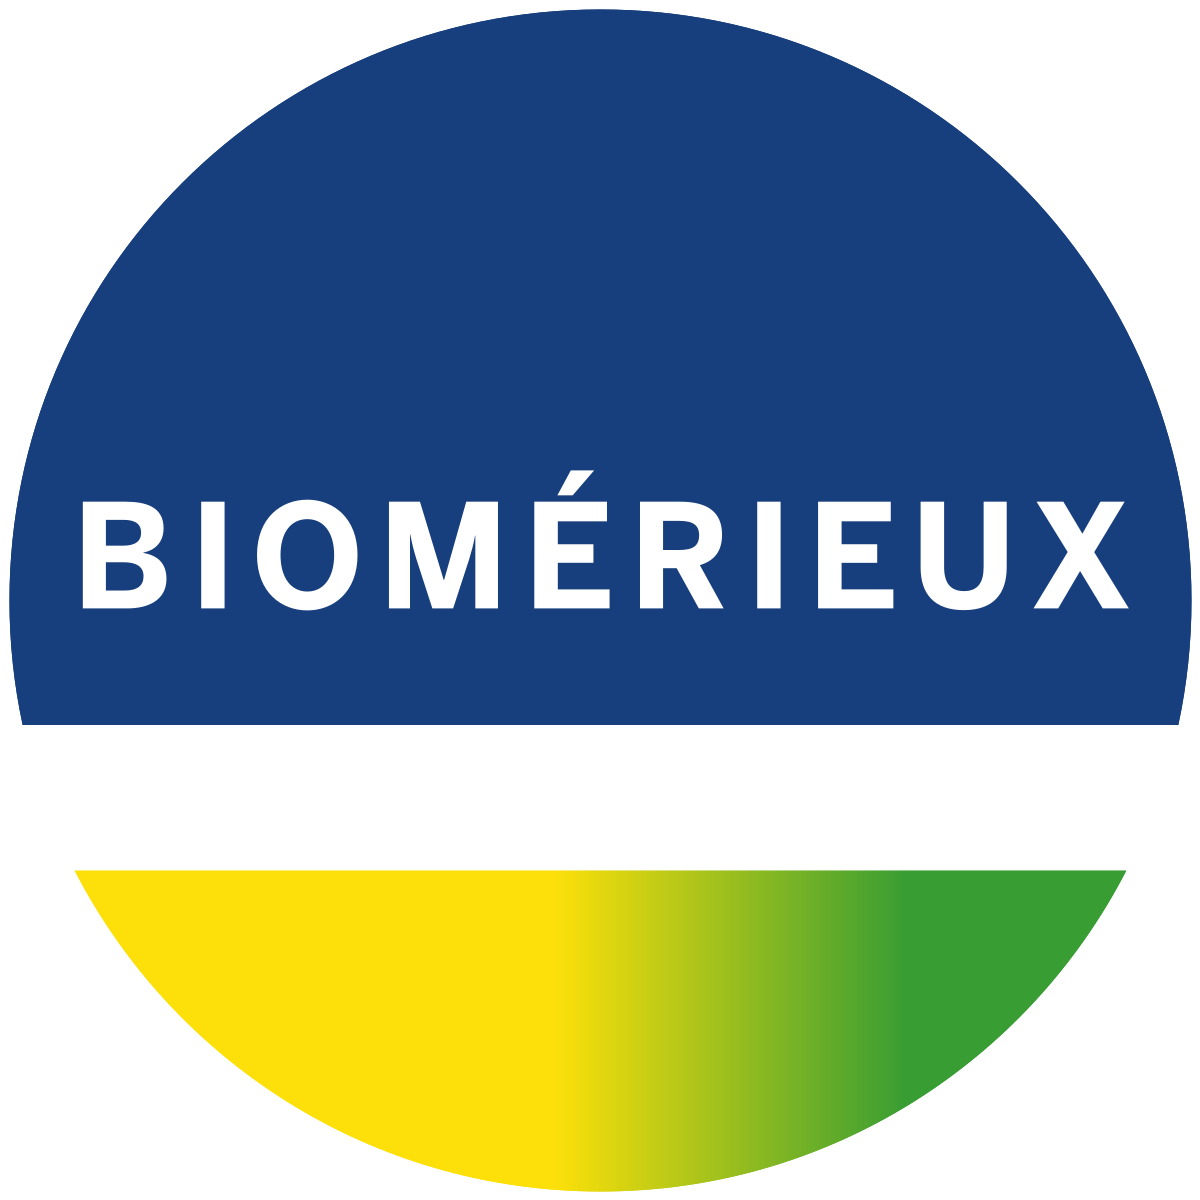 BioMérieux Q4 Revenues up 11 Percent